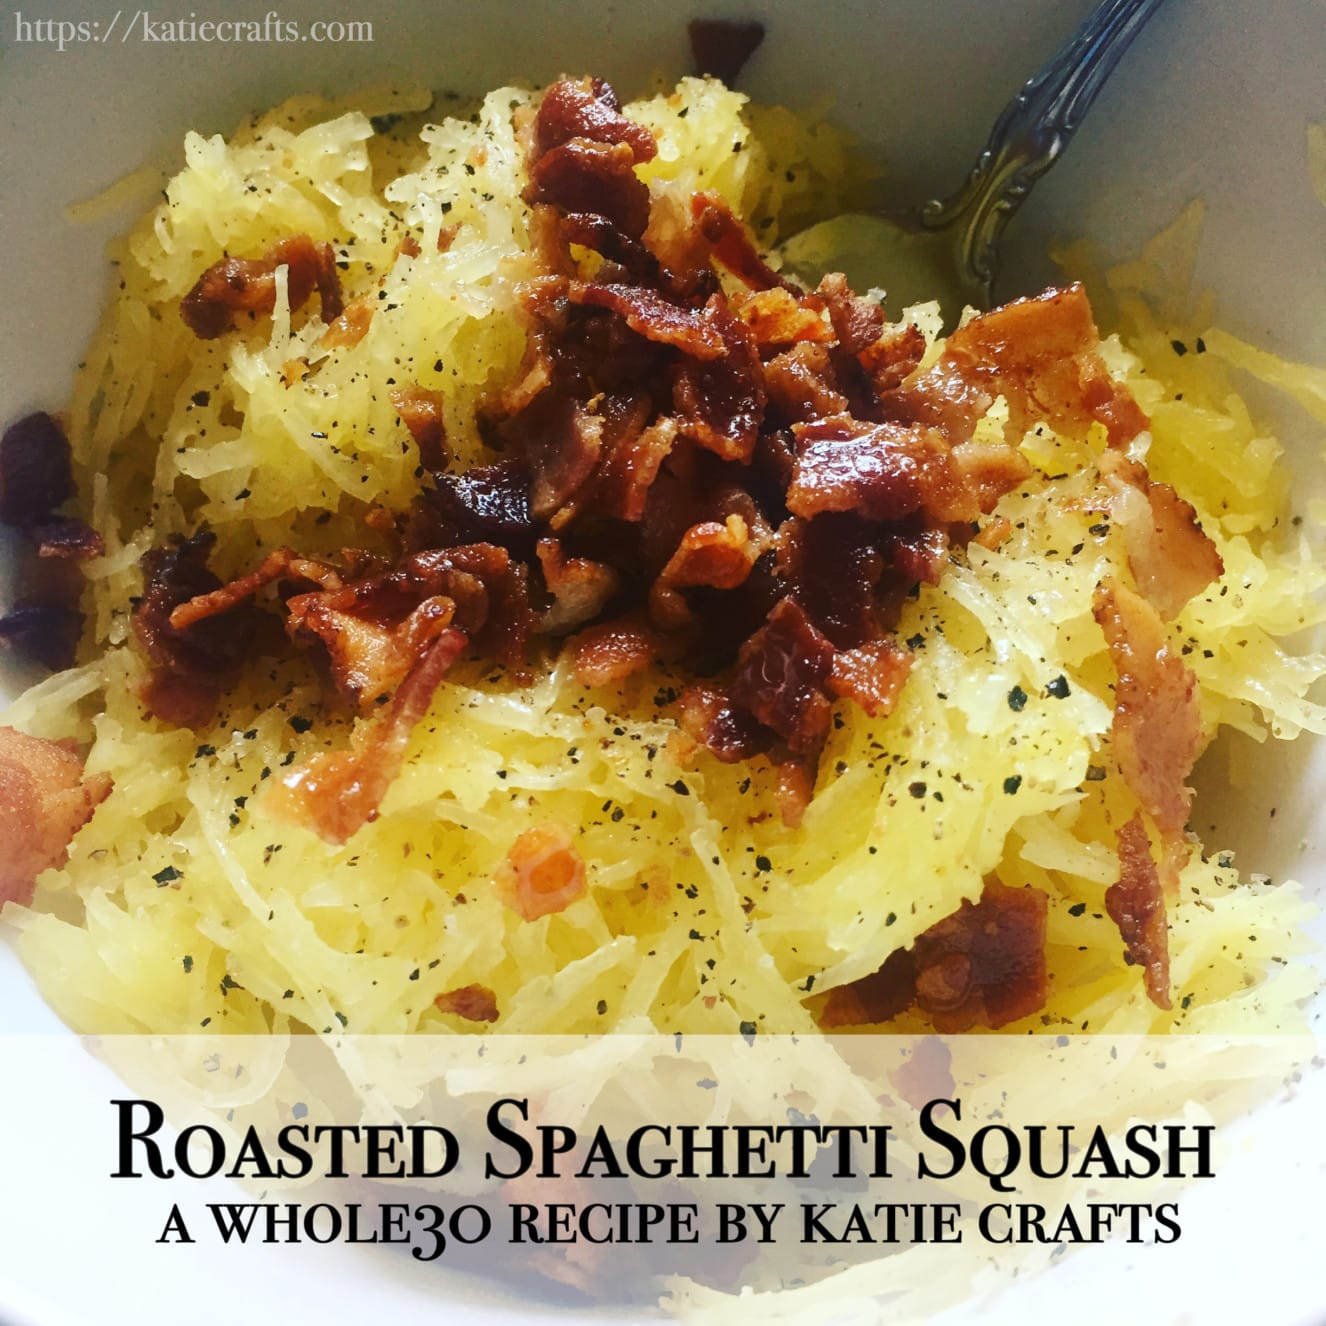 Roasted Spaghetti Squash Recipe on Katie Crafts; https://www.katiecrafts.com